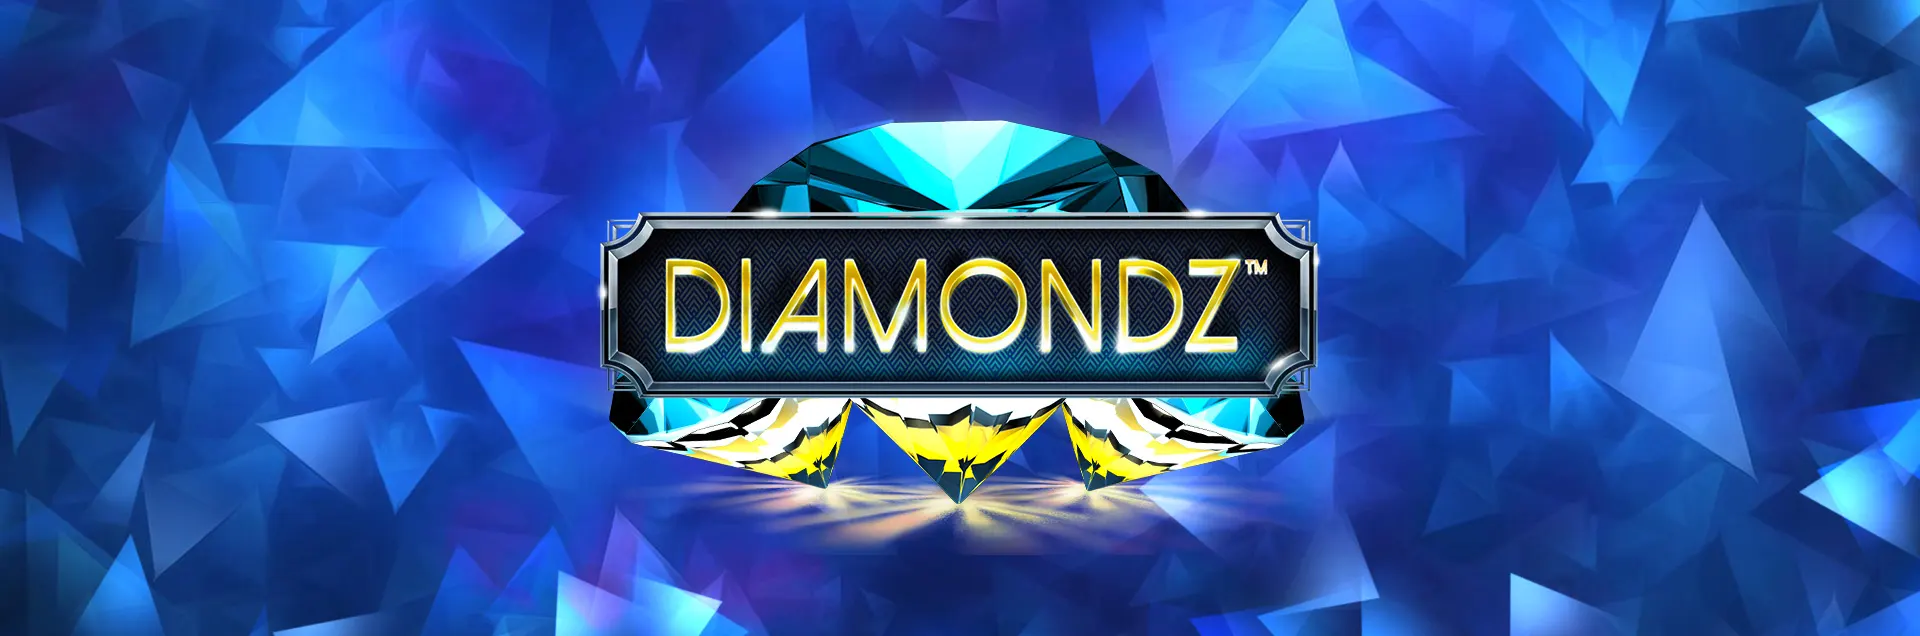 diamondz